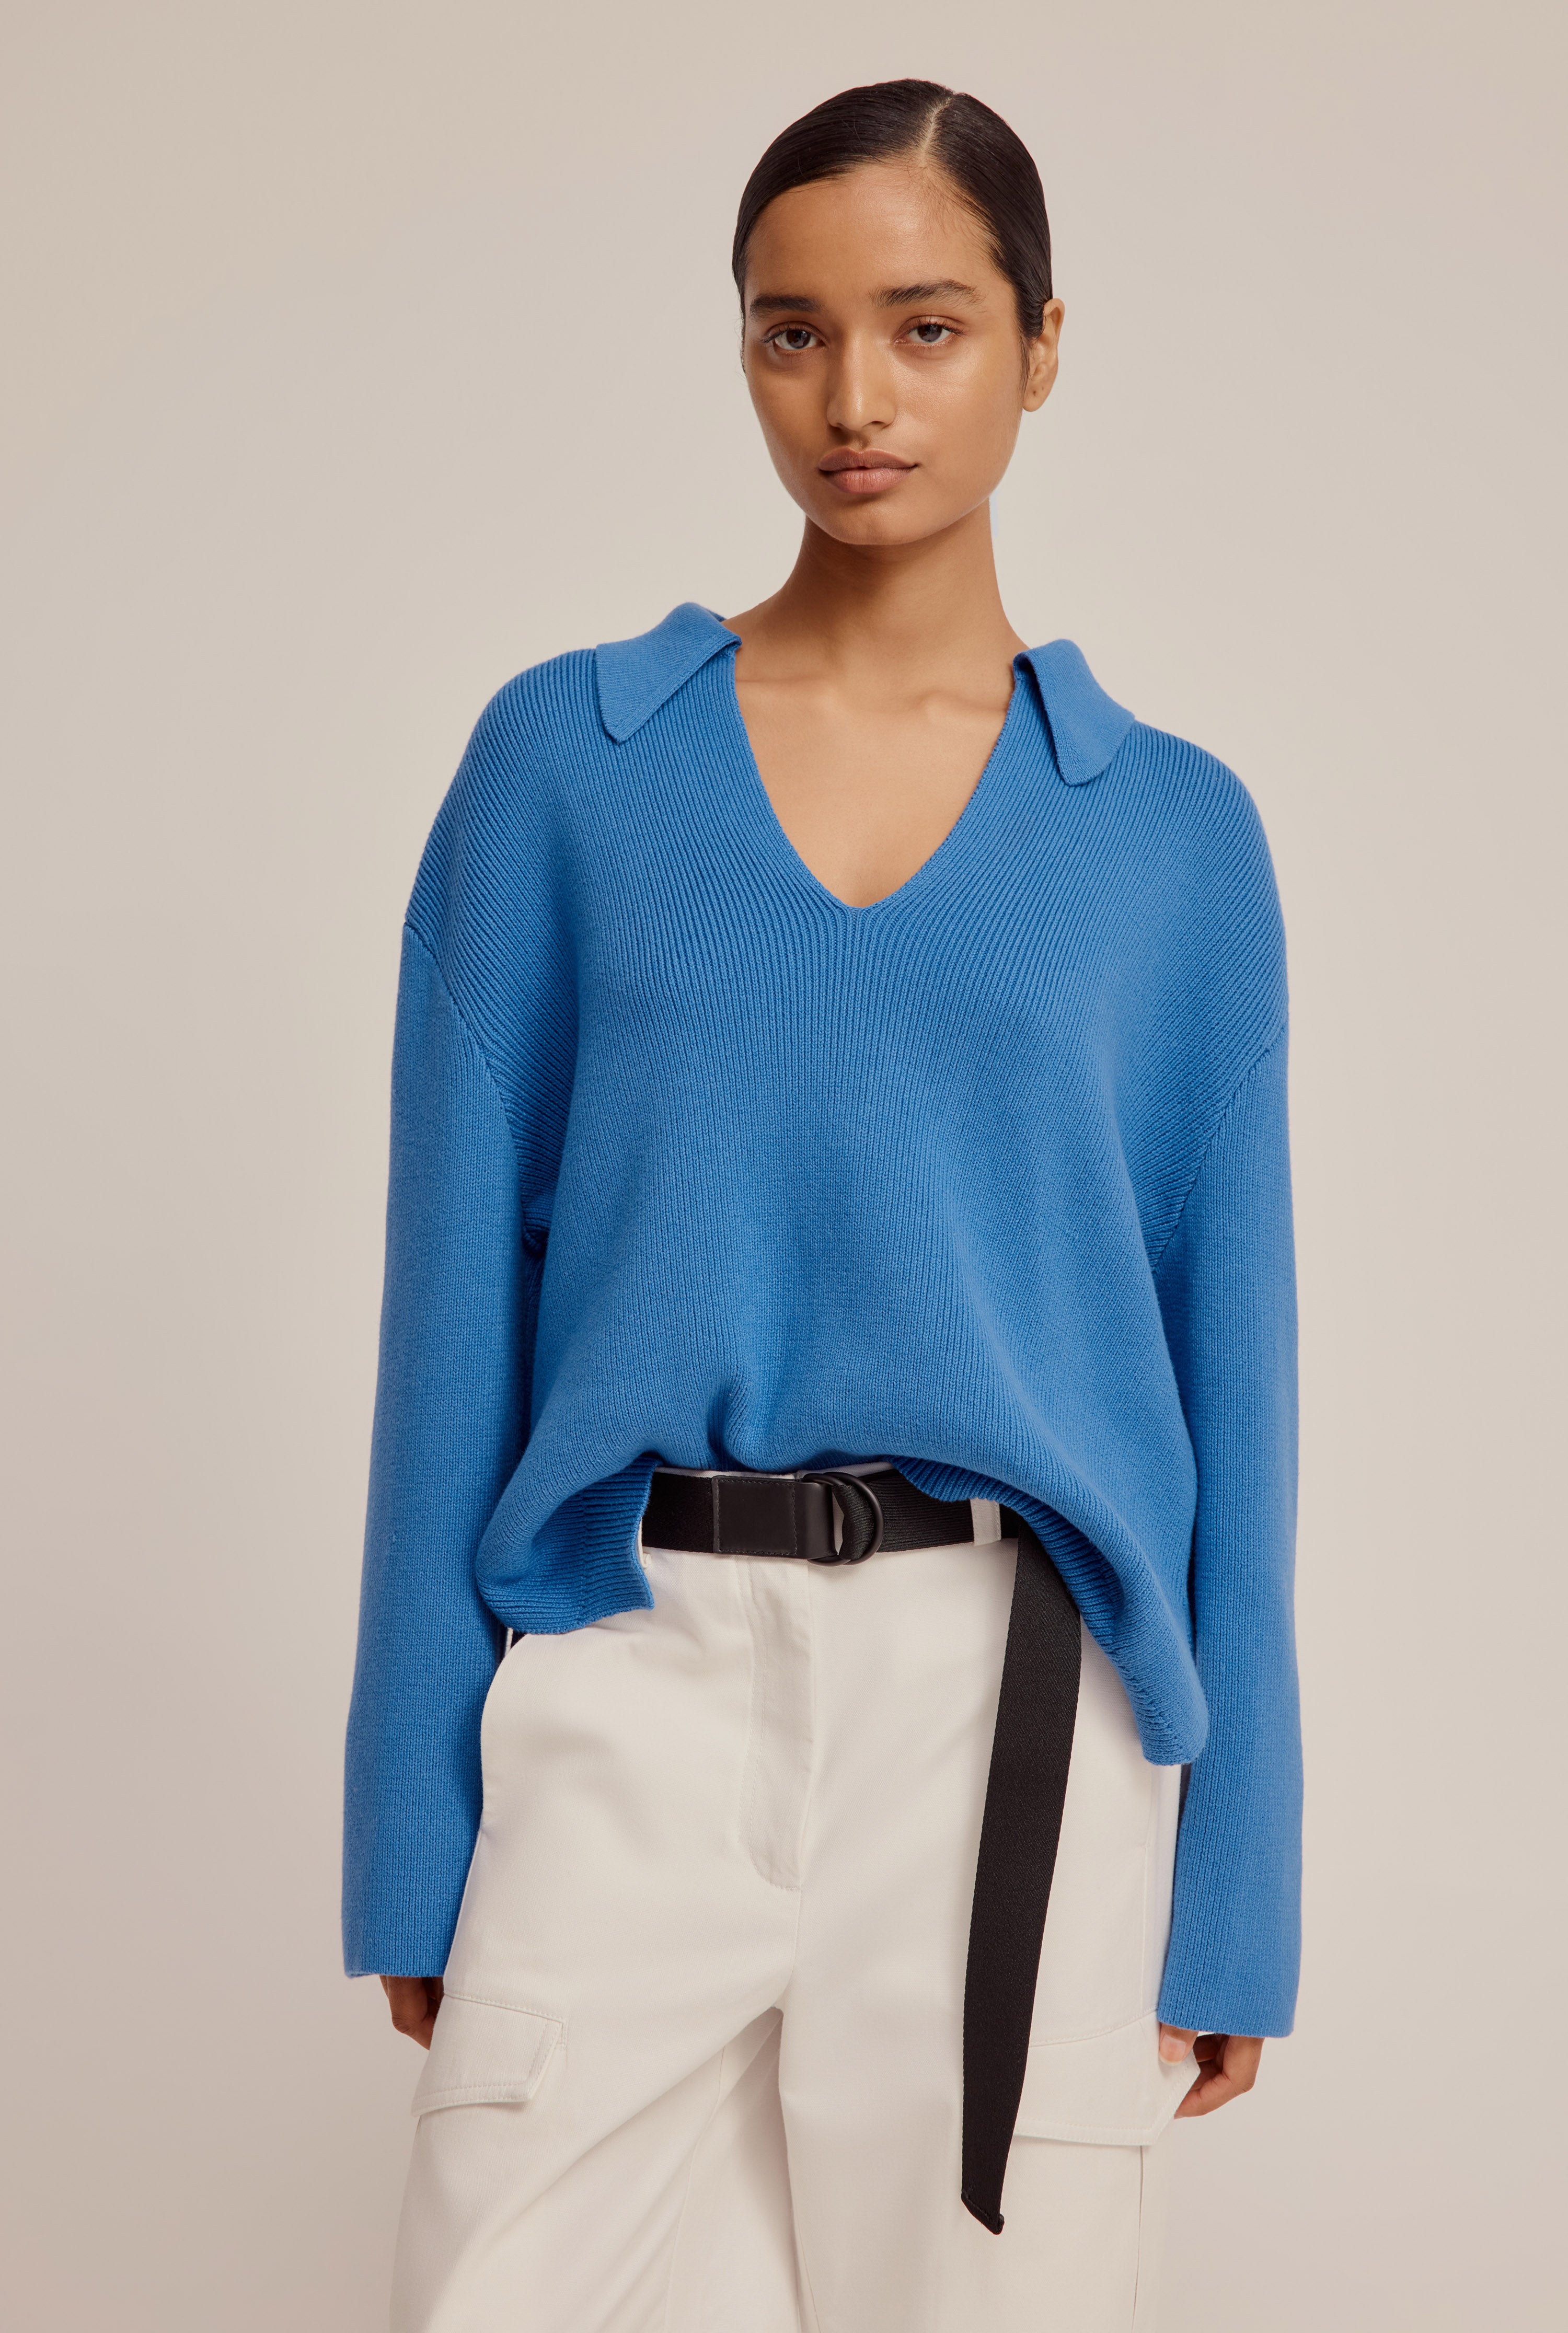 Venroy - Womens Cotton Cashmere Oversized Open Neck Sweater | Venroy ...